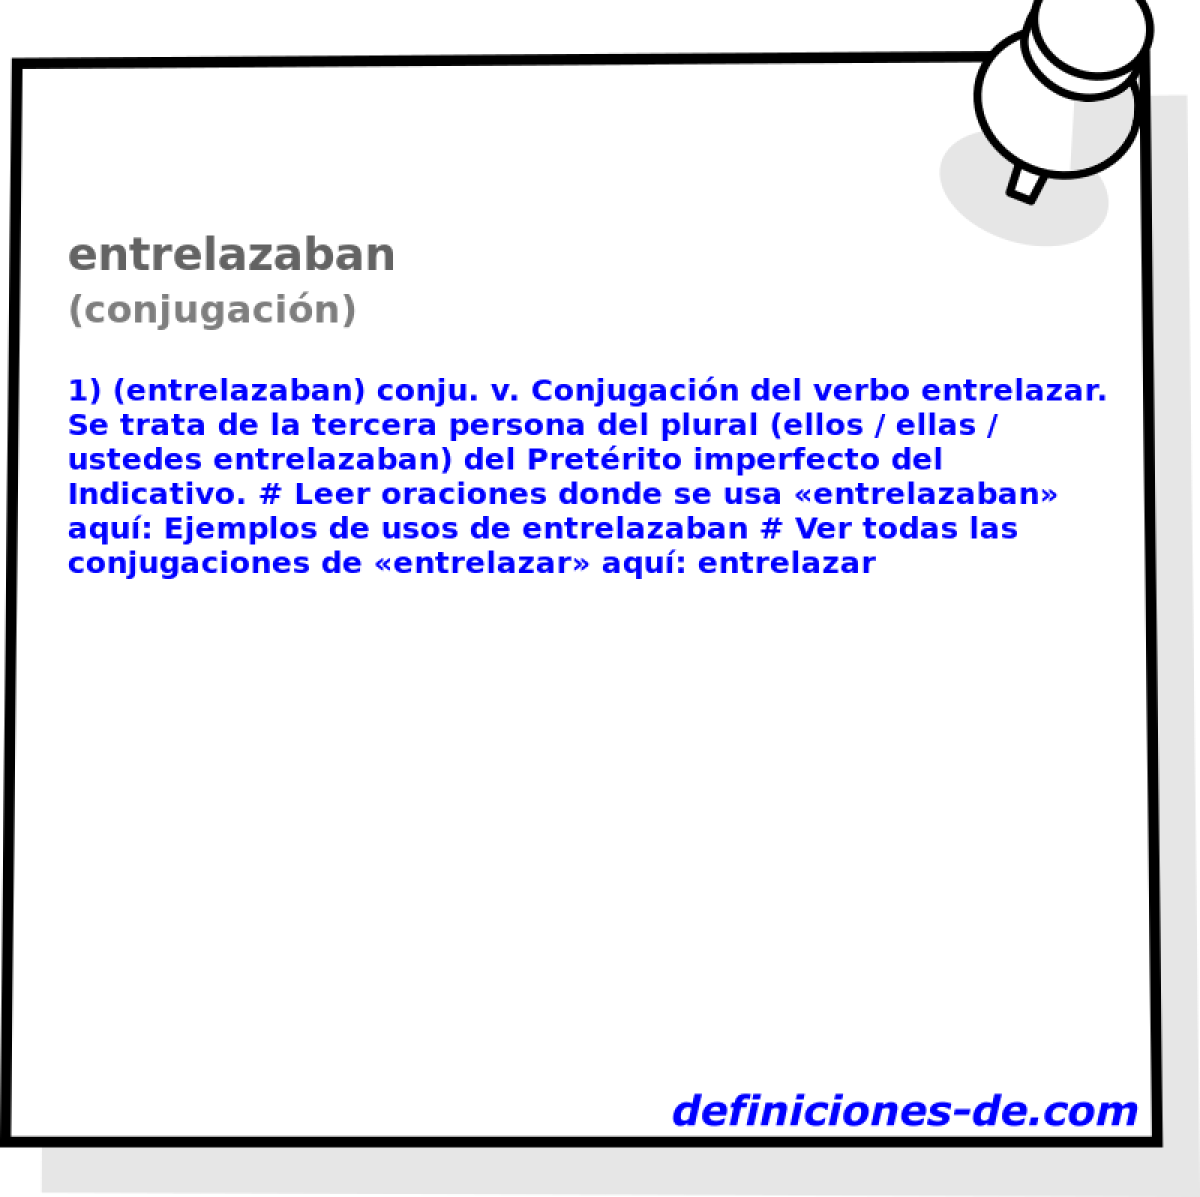 entrelazaban (conjugacin)